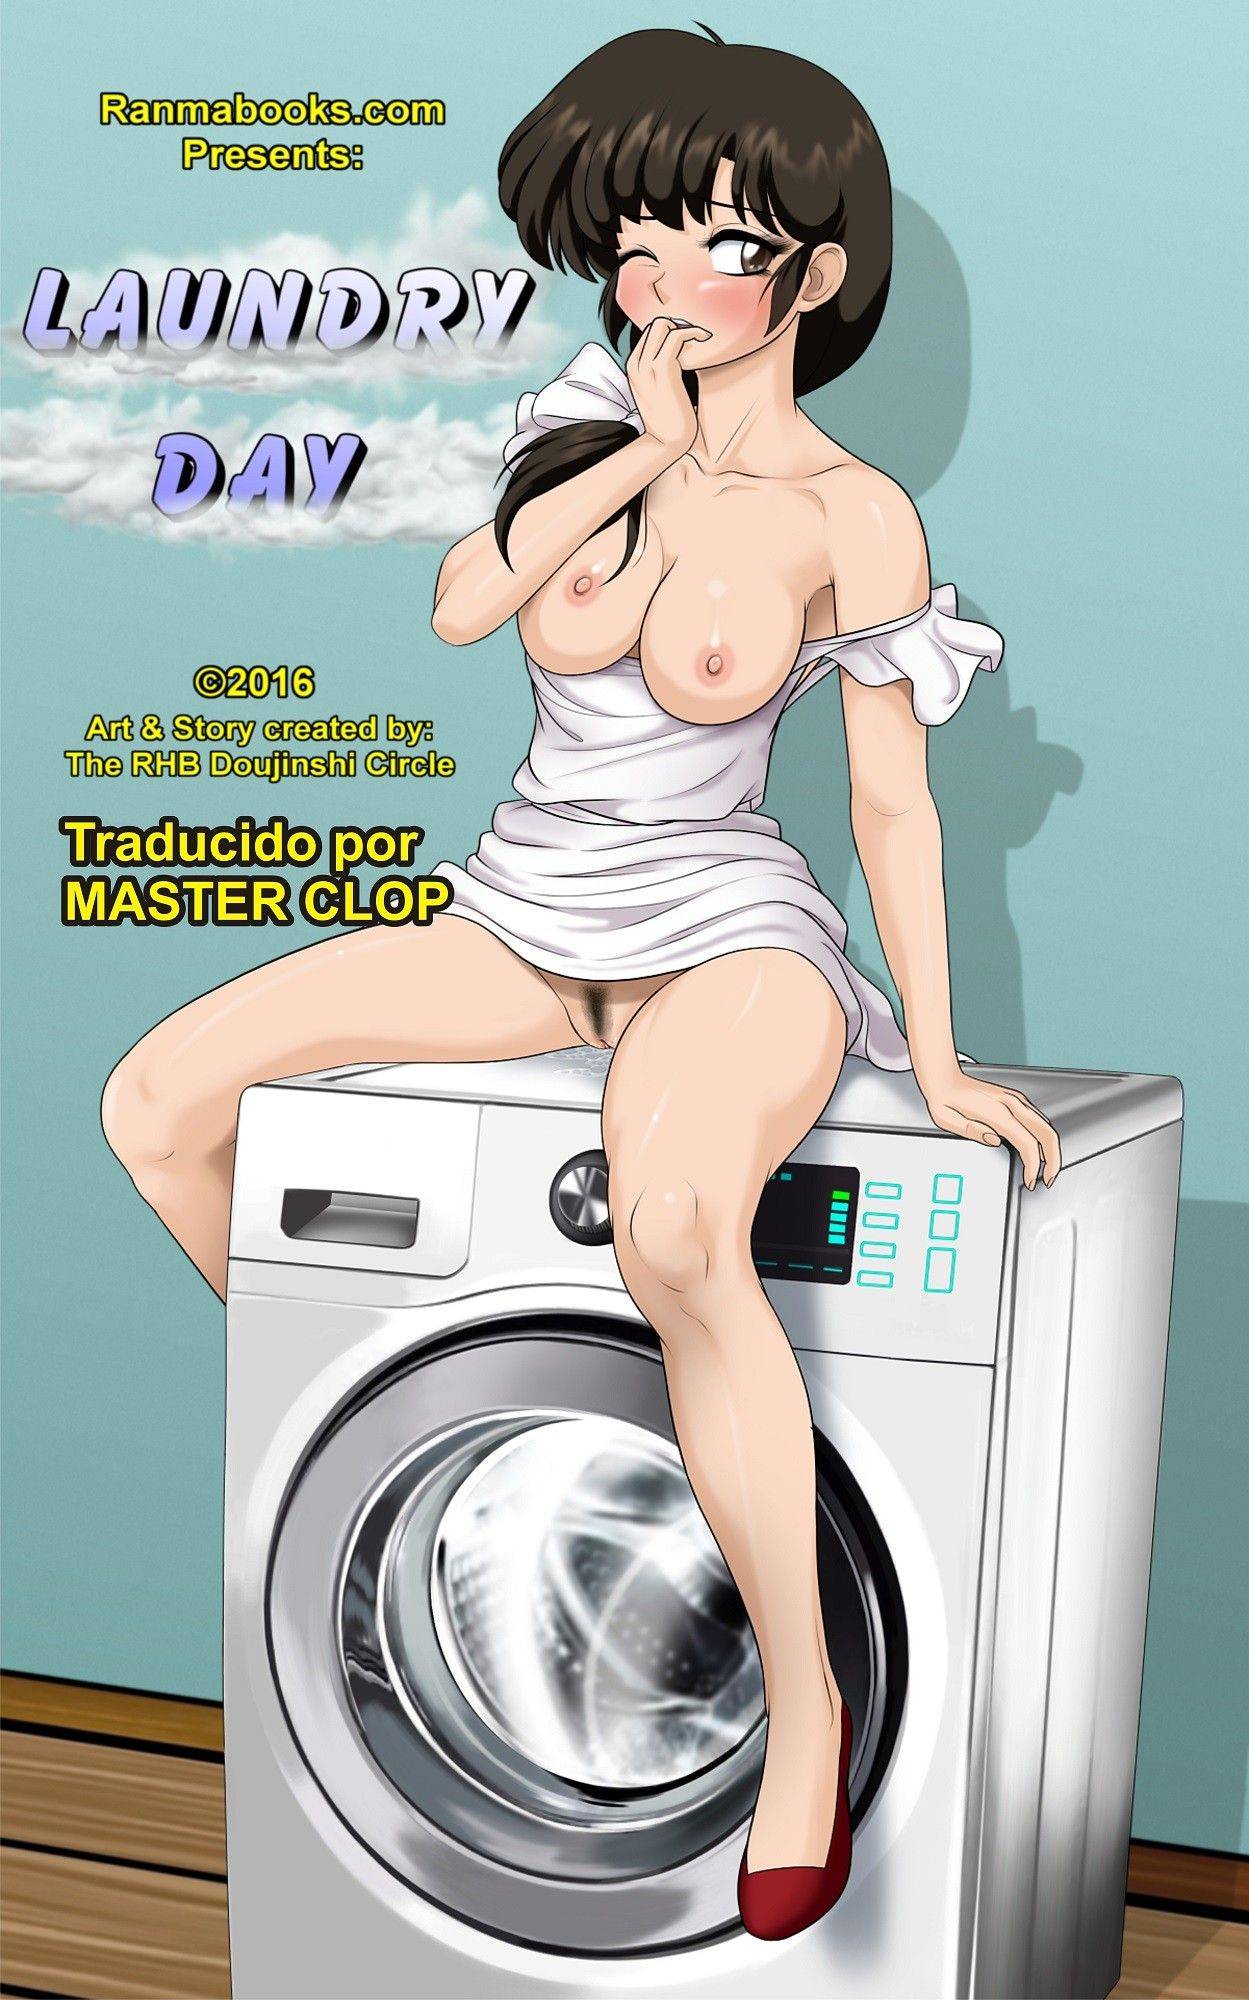 Laundry day